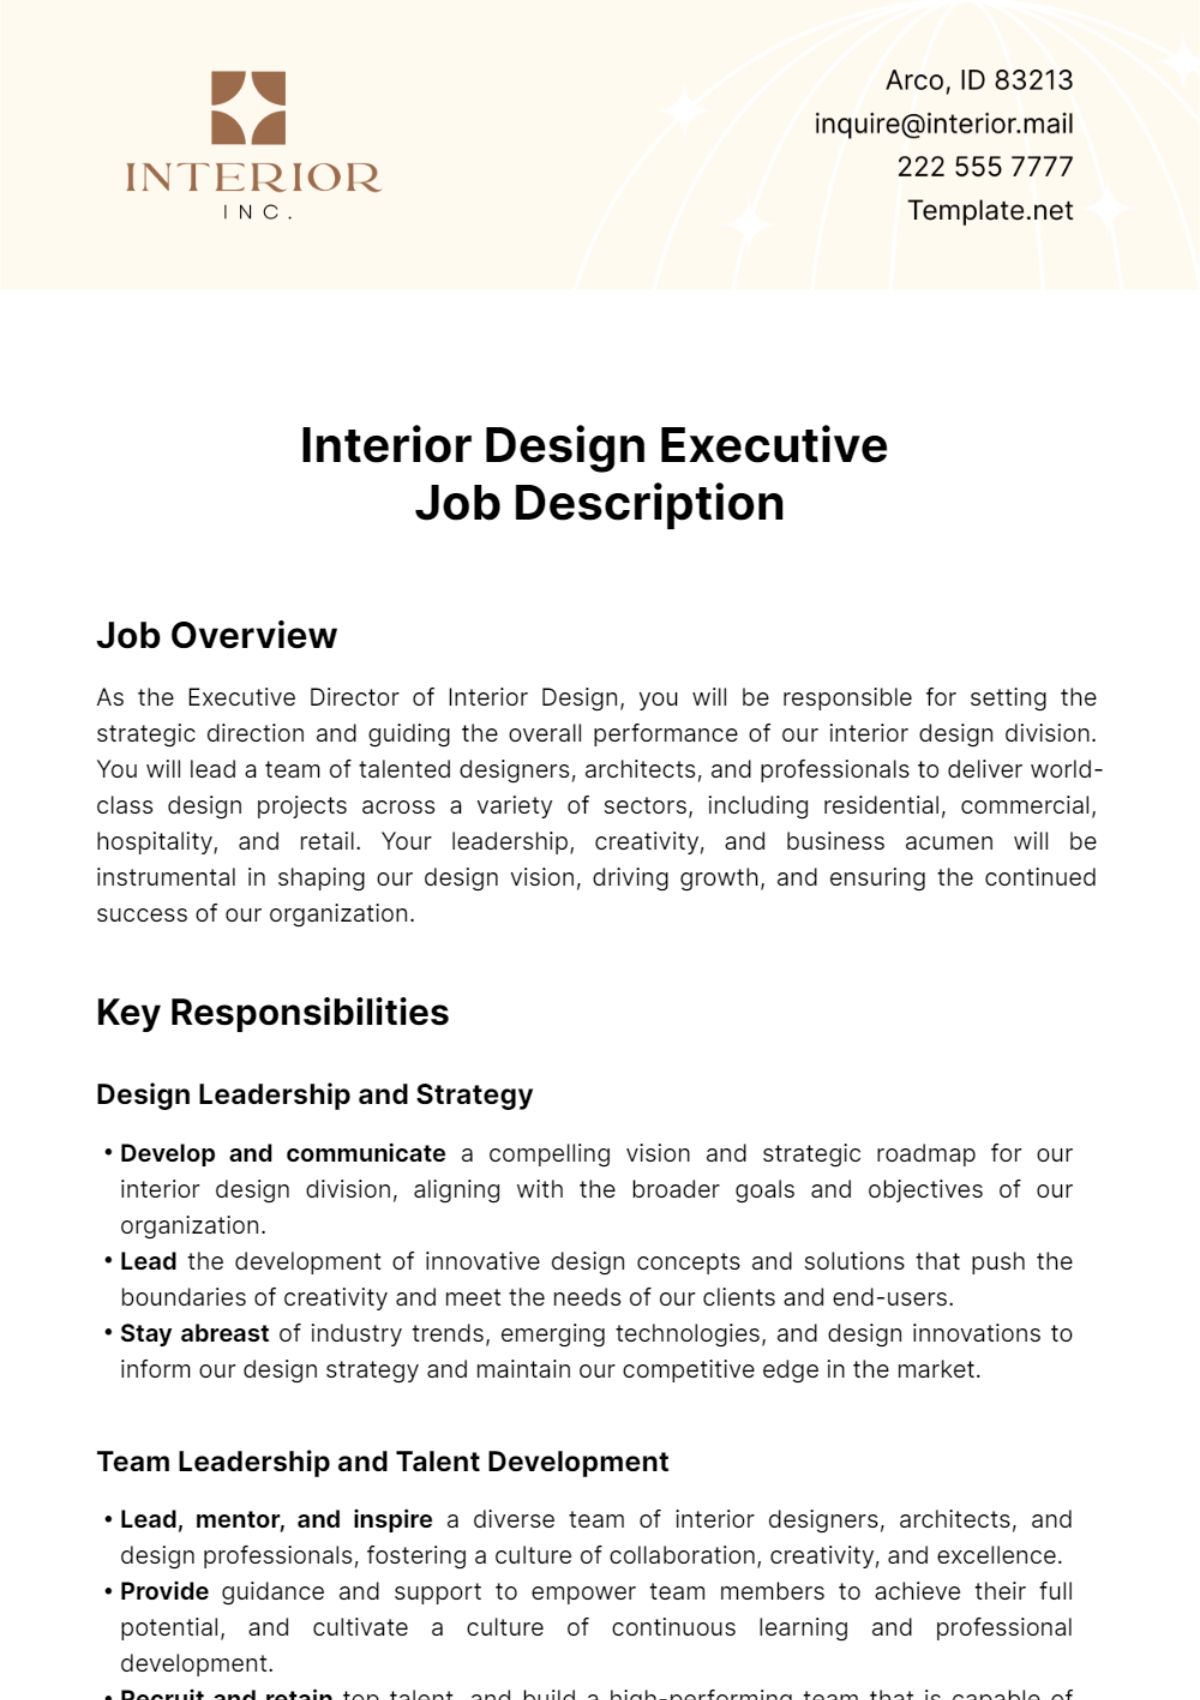 Free Interior Design Executive Job Description Template